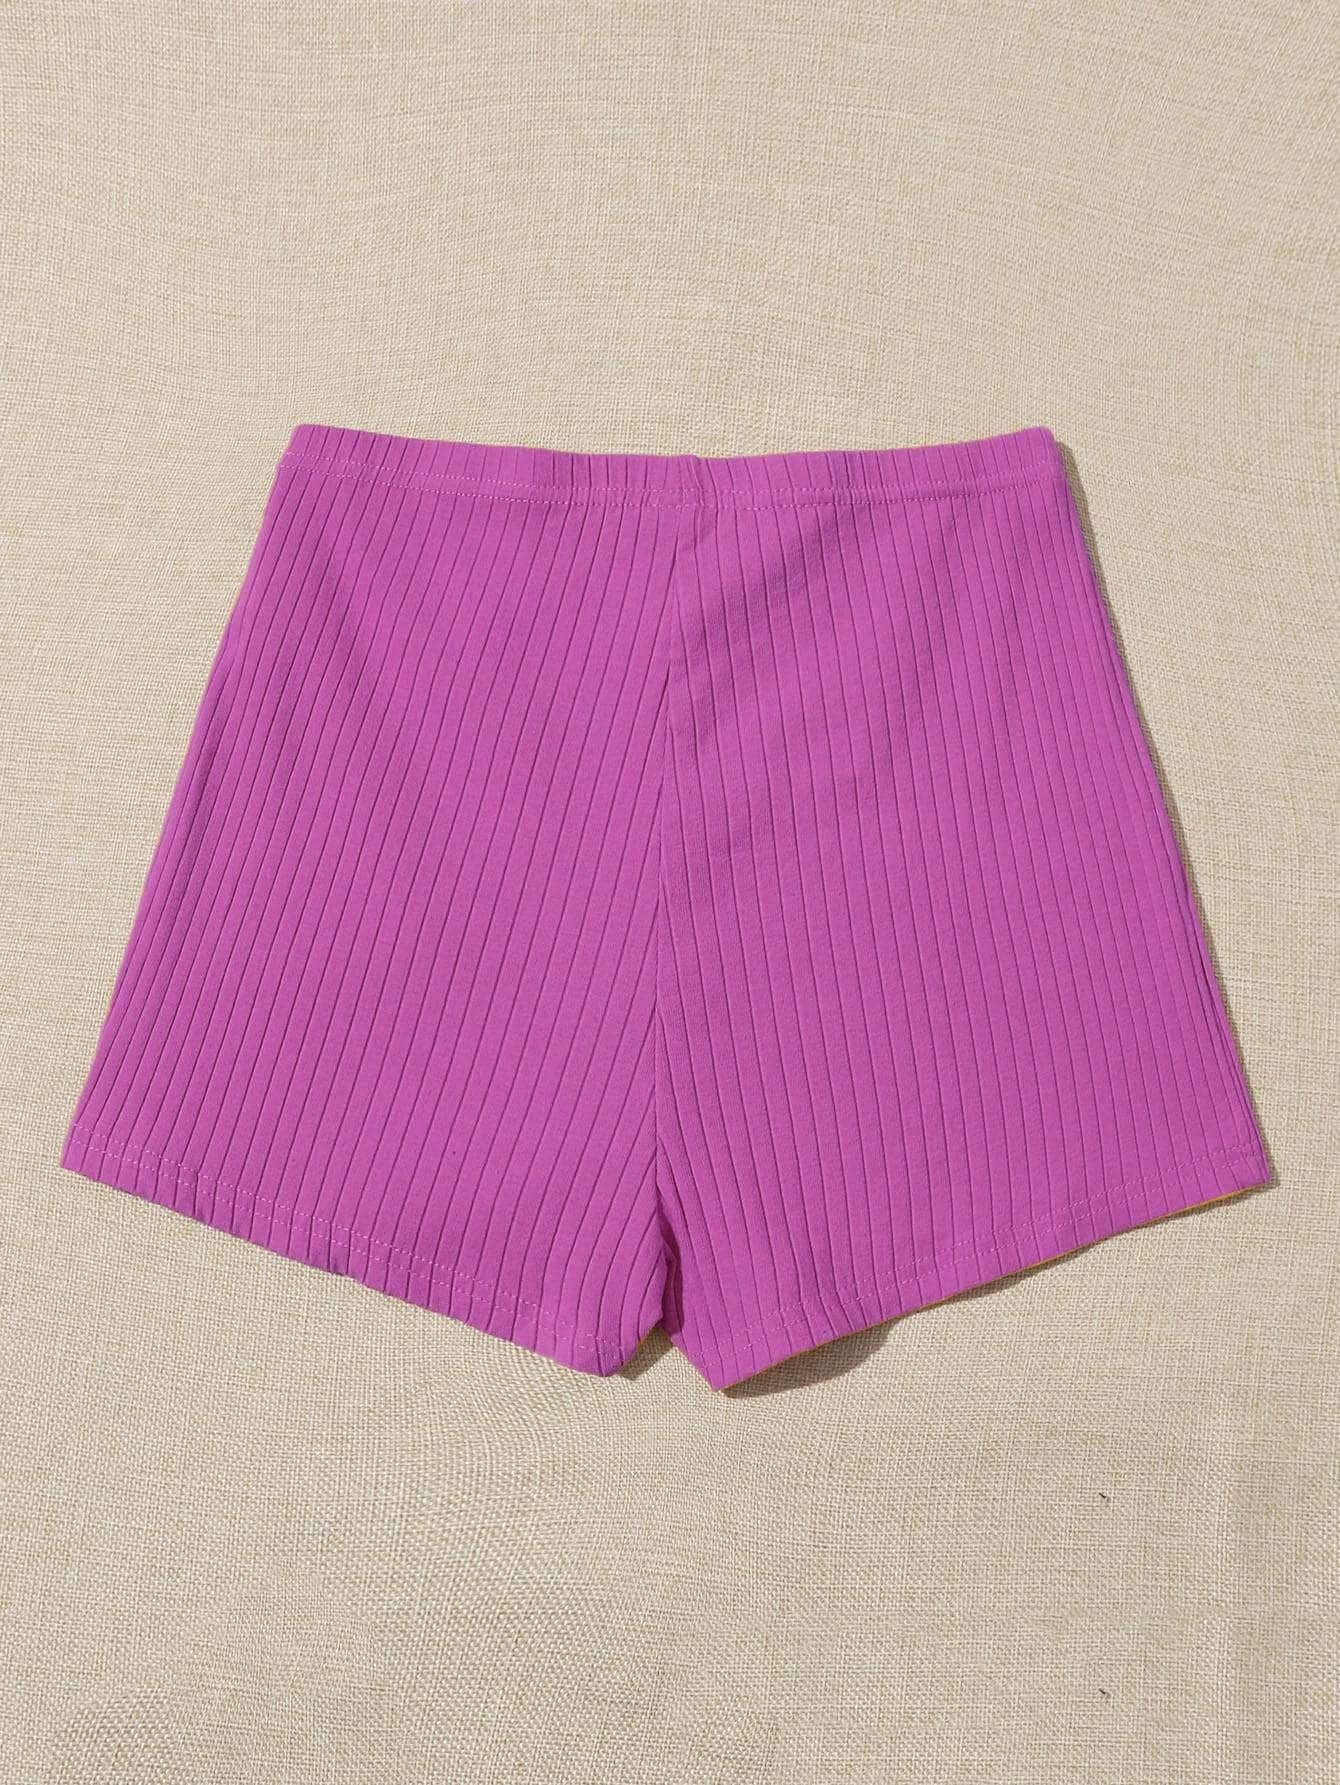 Rojo violeta / S SHEIN Shorts tejido de canalé de cintura elástica